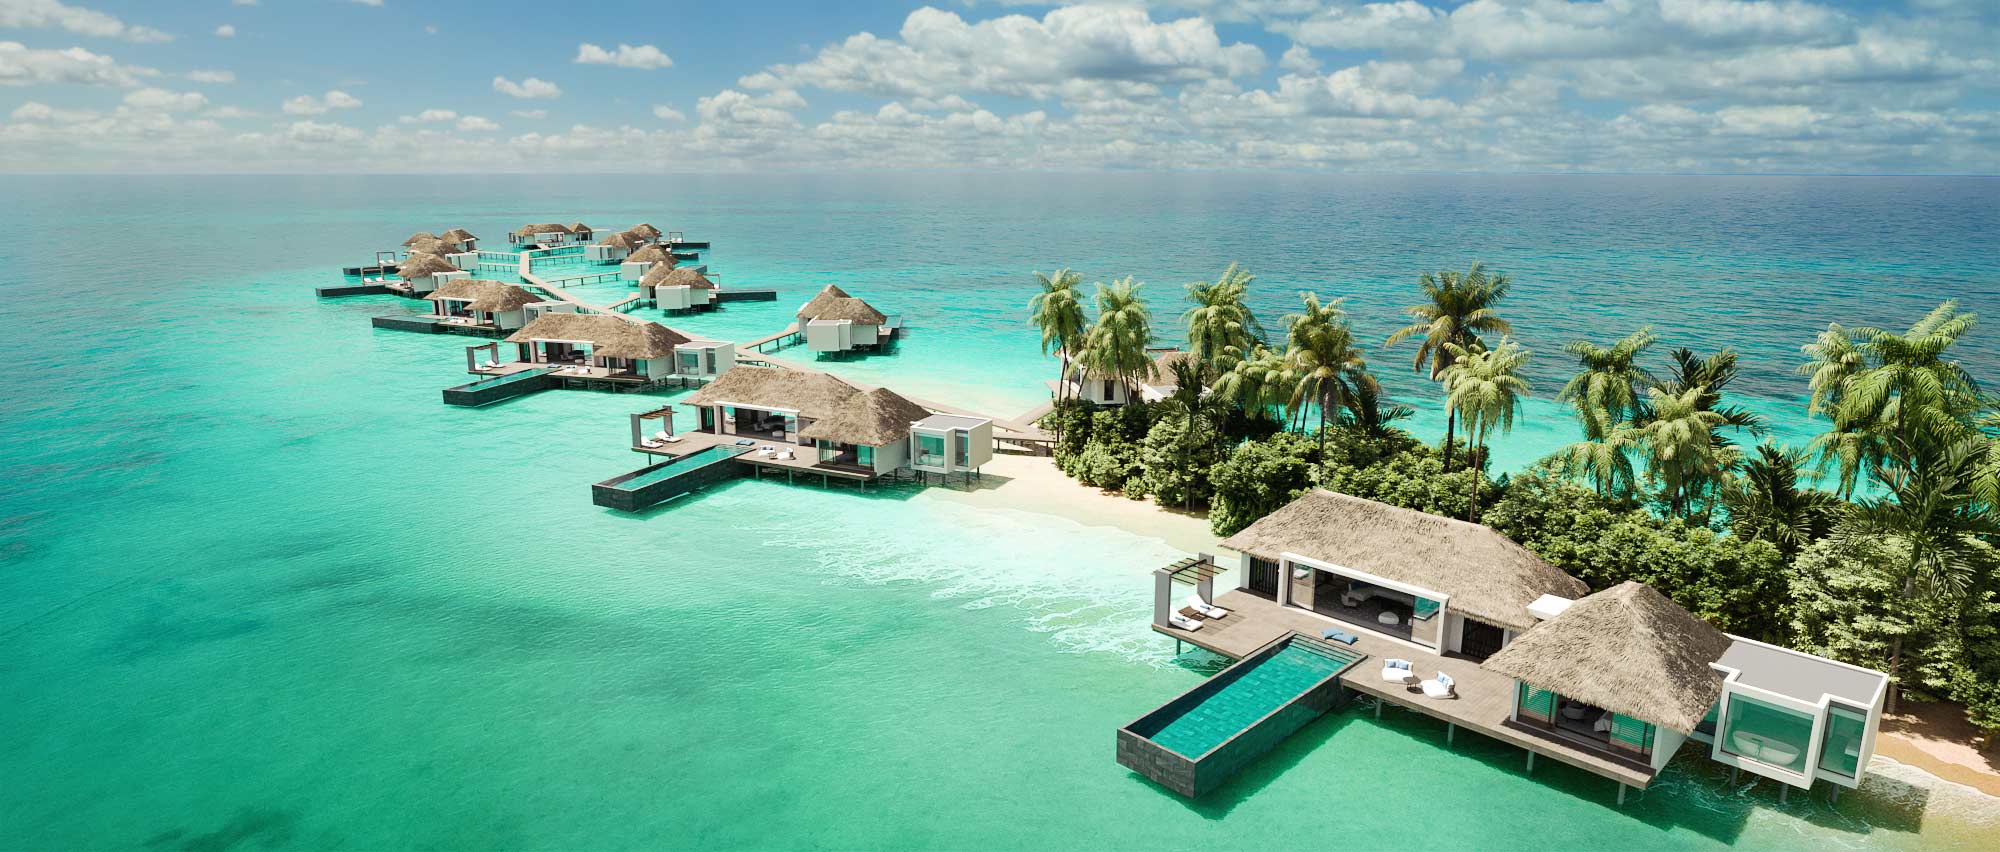 Luxury Resort Maldives (6)